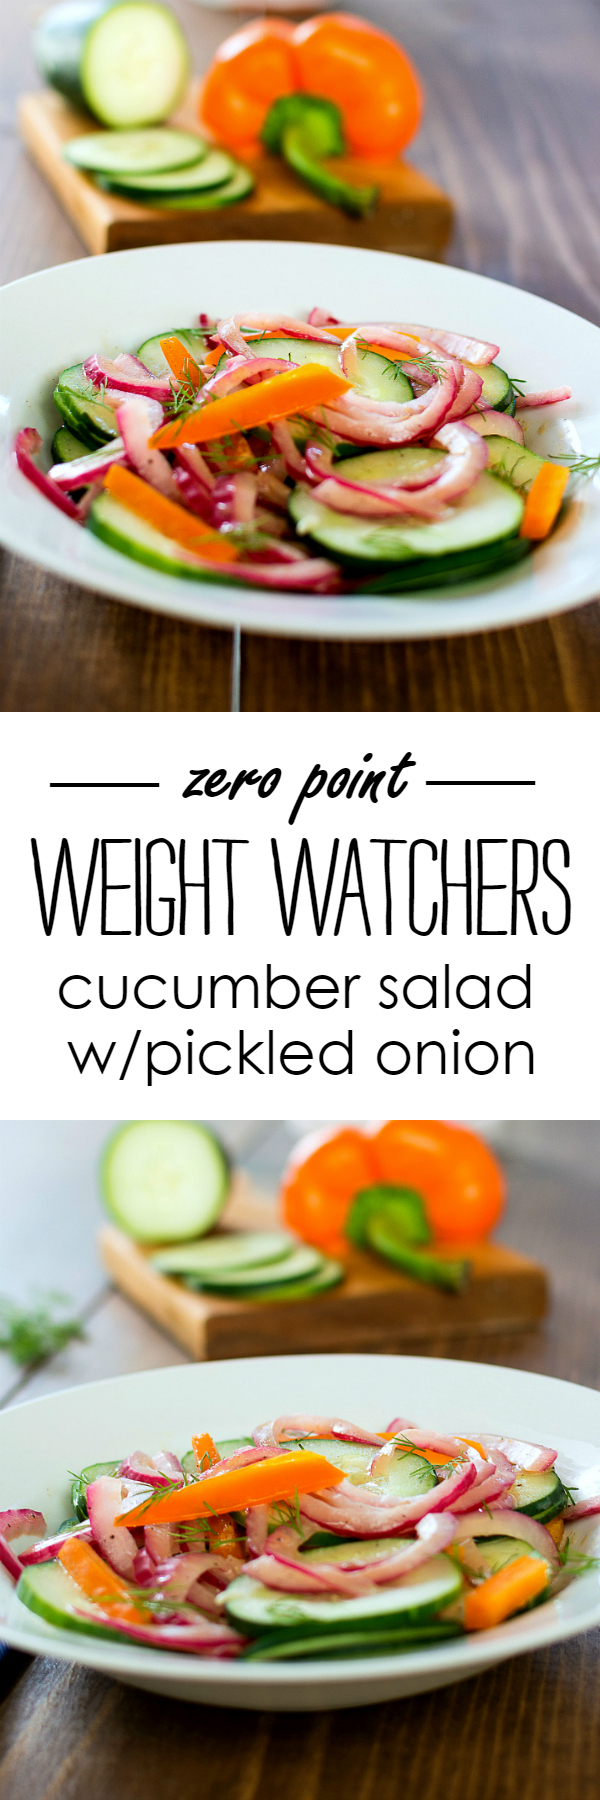 Weight Watchers Salad Recipe Ideas